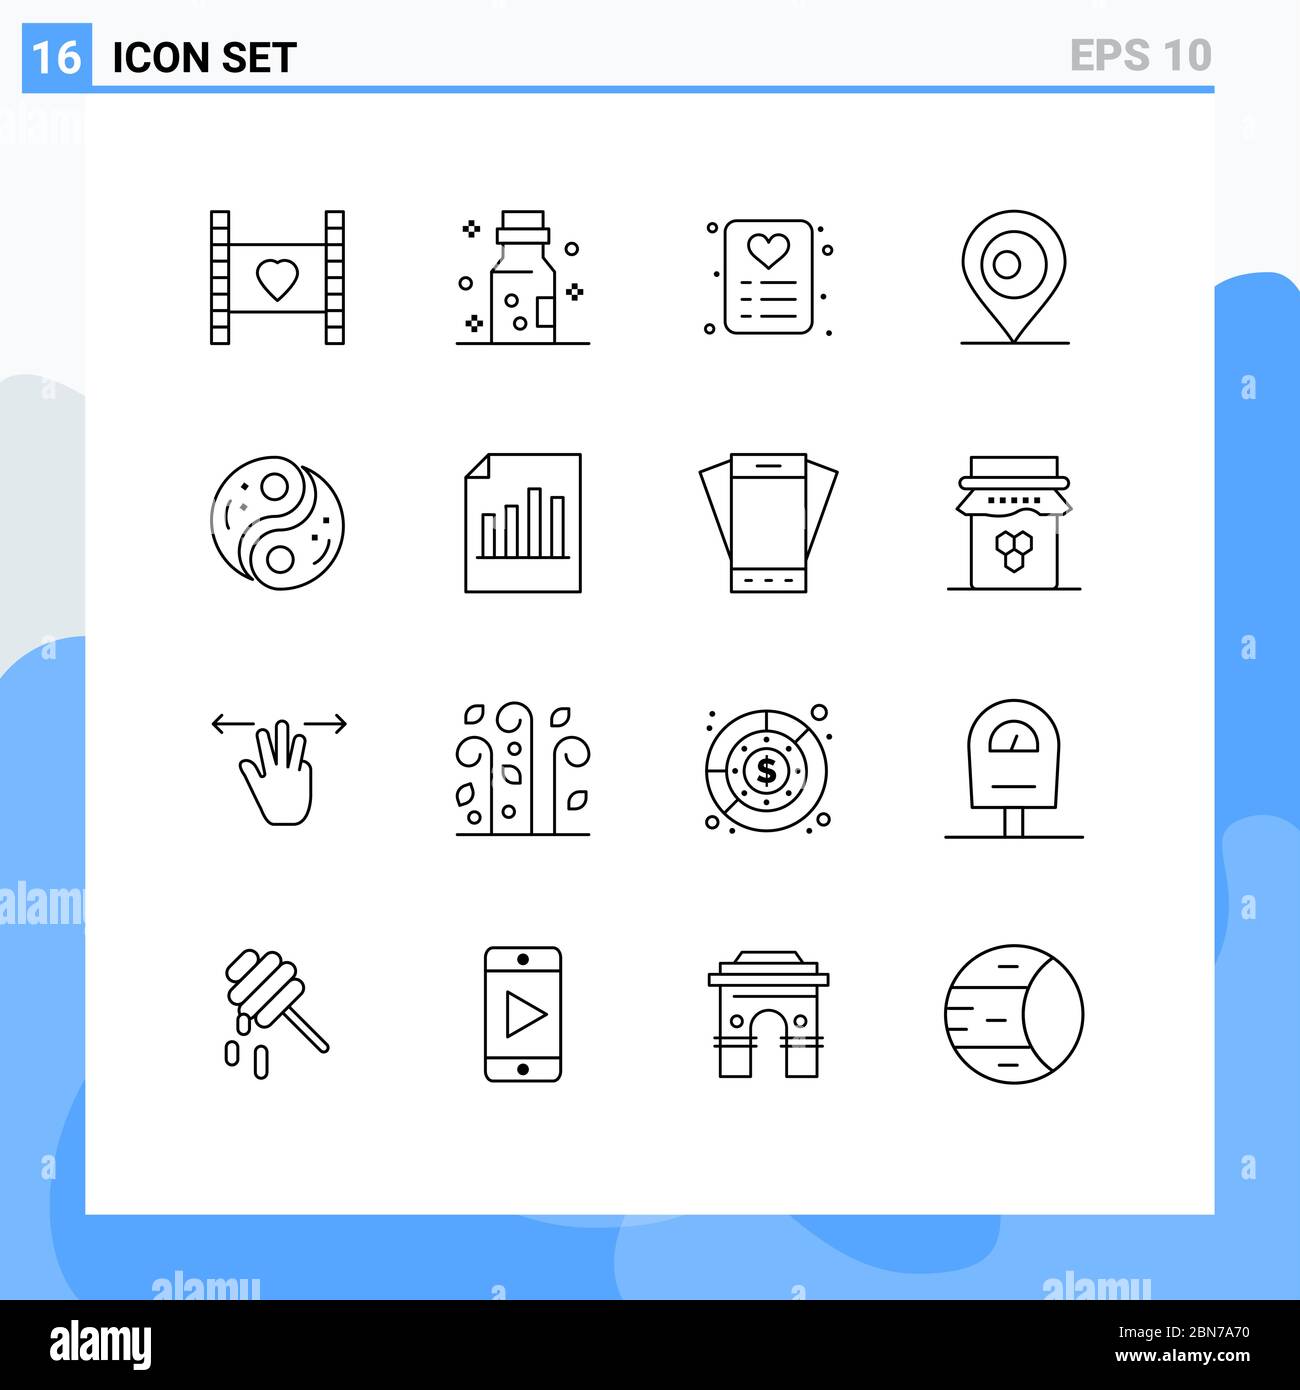 Set of 16 Modern UI Icons Symbols Signs for unity, polarity, poison, bangladash, location Editable Vector Design Elements Stock Vector